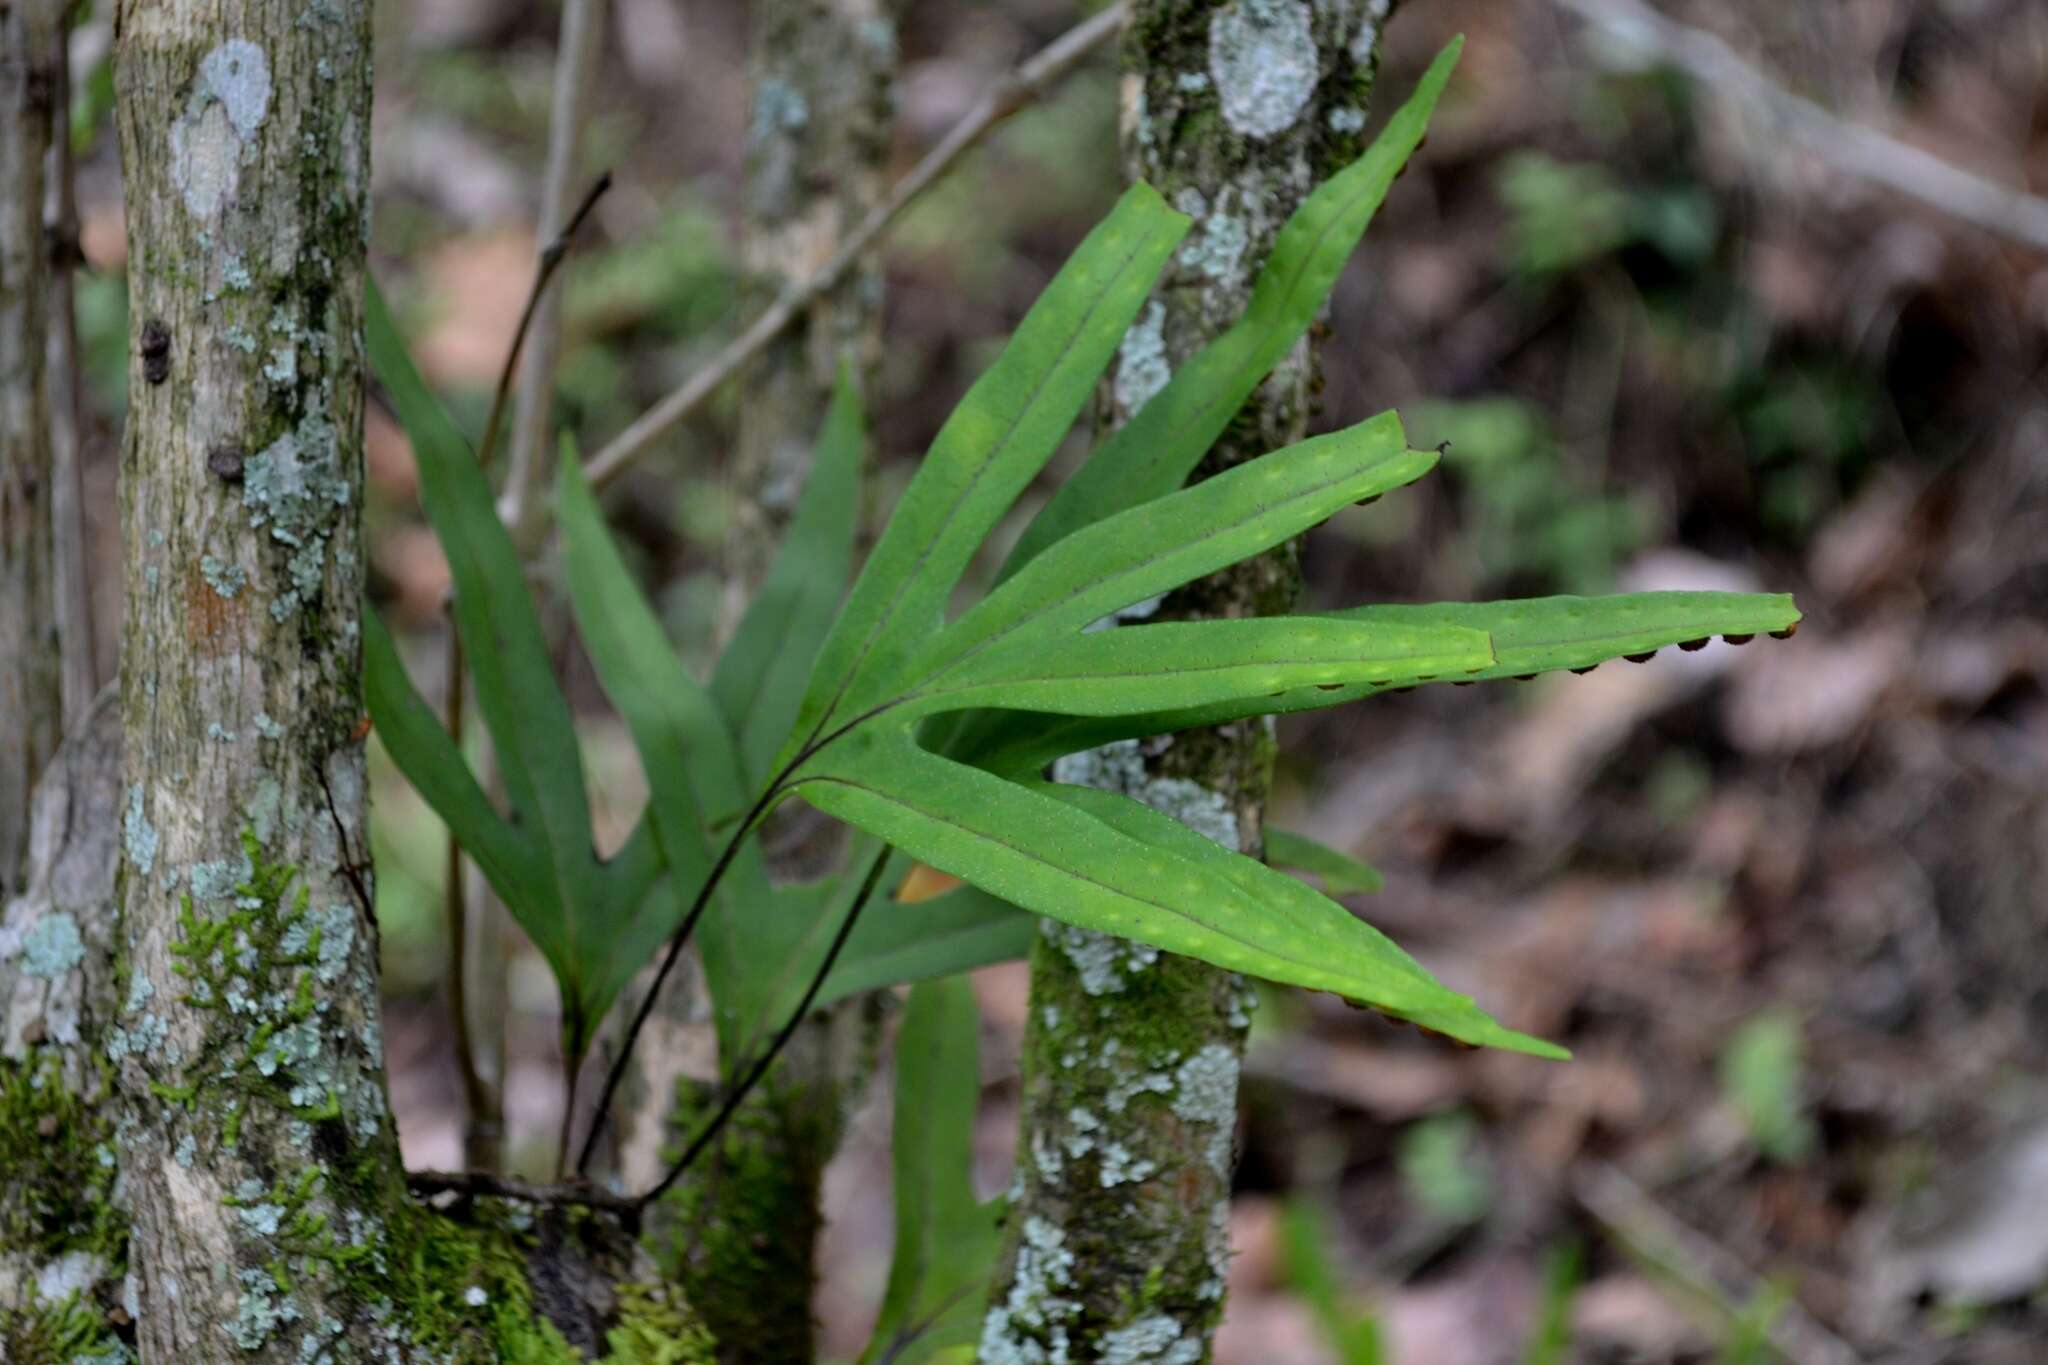 Image of Pleopeltis angusta Humb. & Bonpl. ex Willd.